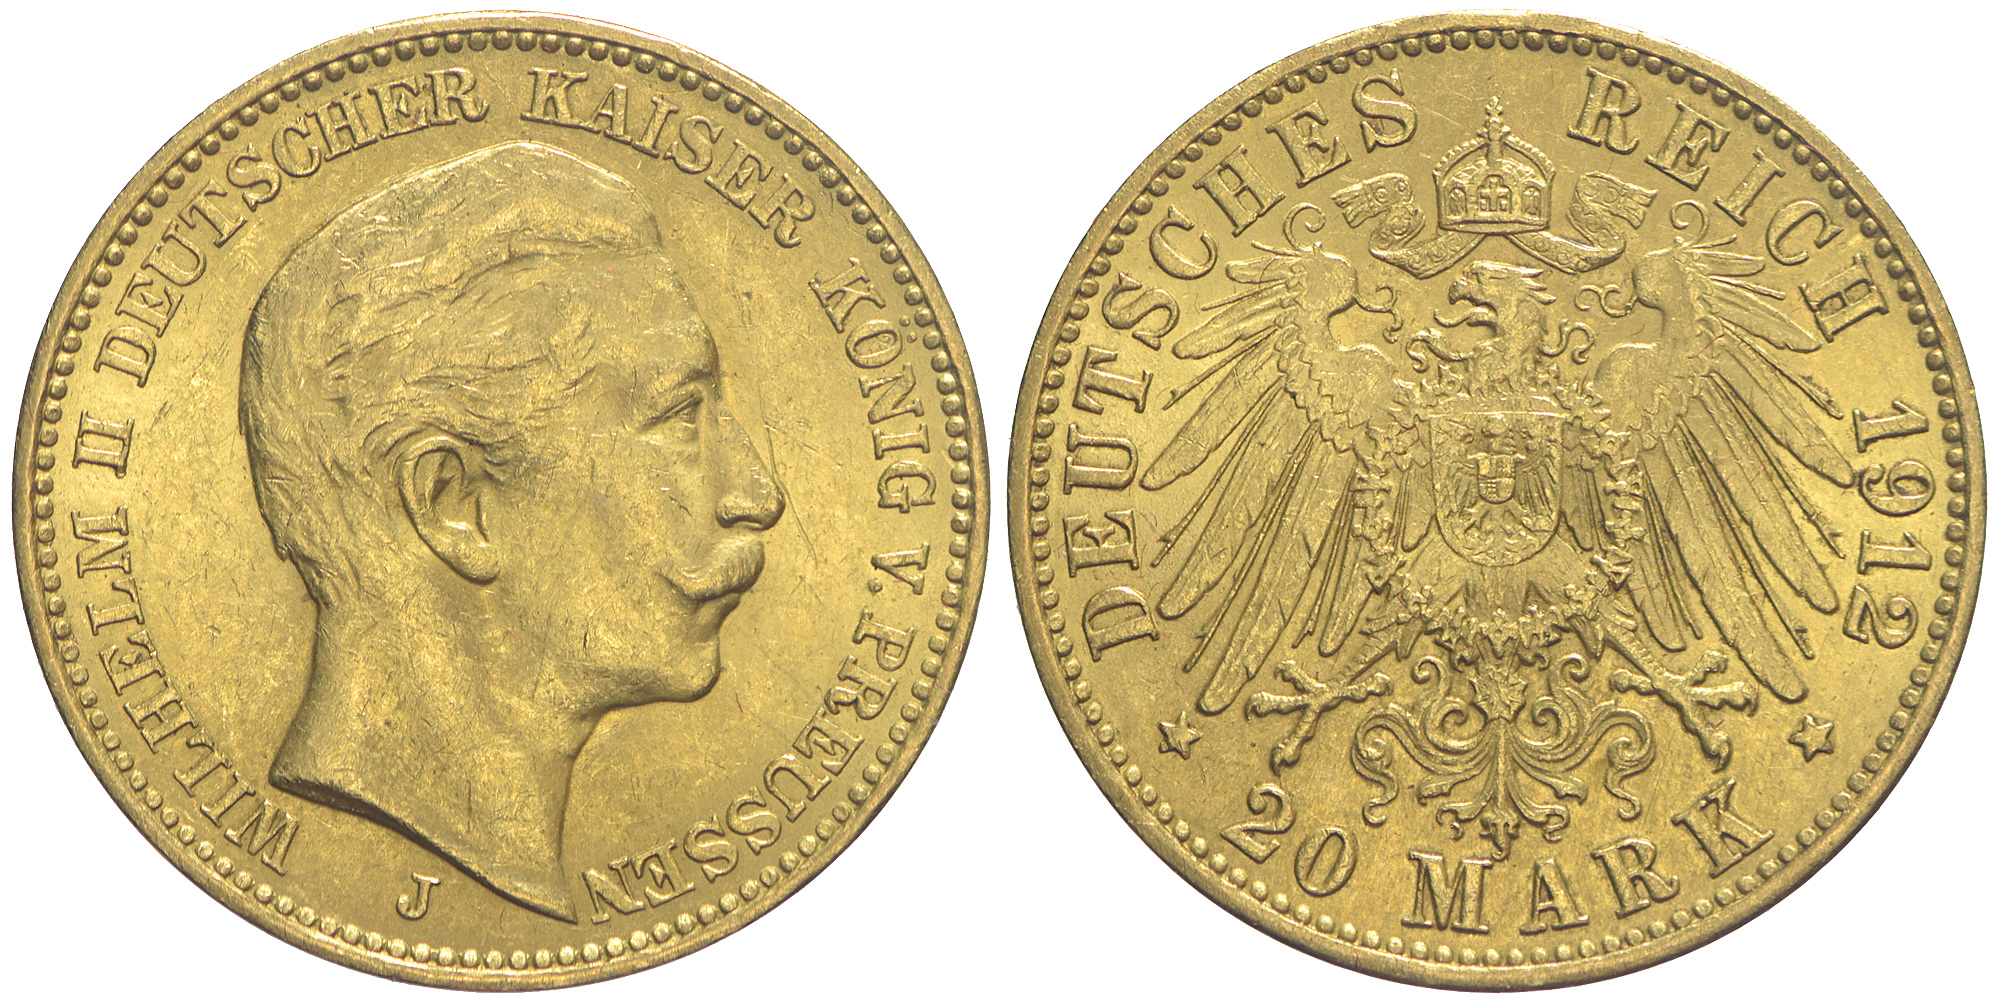 Germany Prussia Wilhelm Mark 1912 Gold 